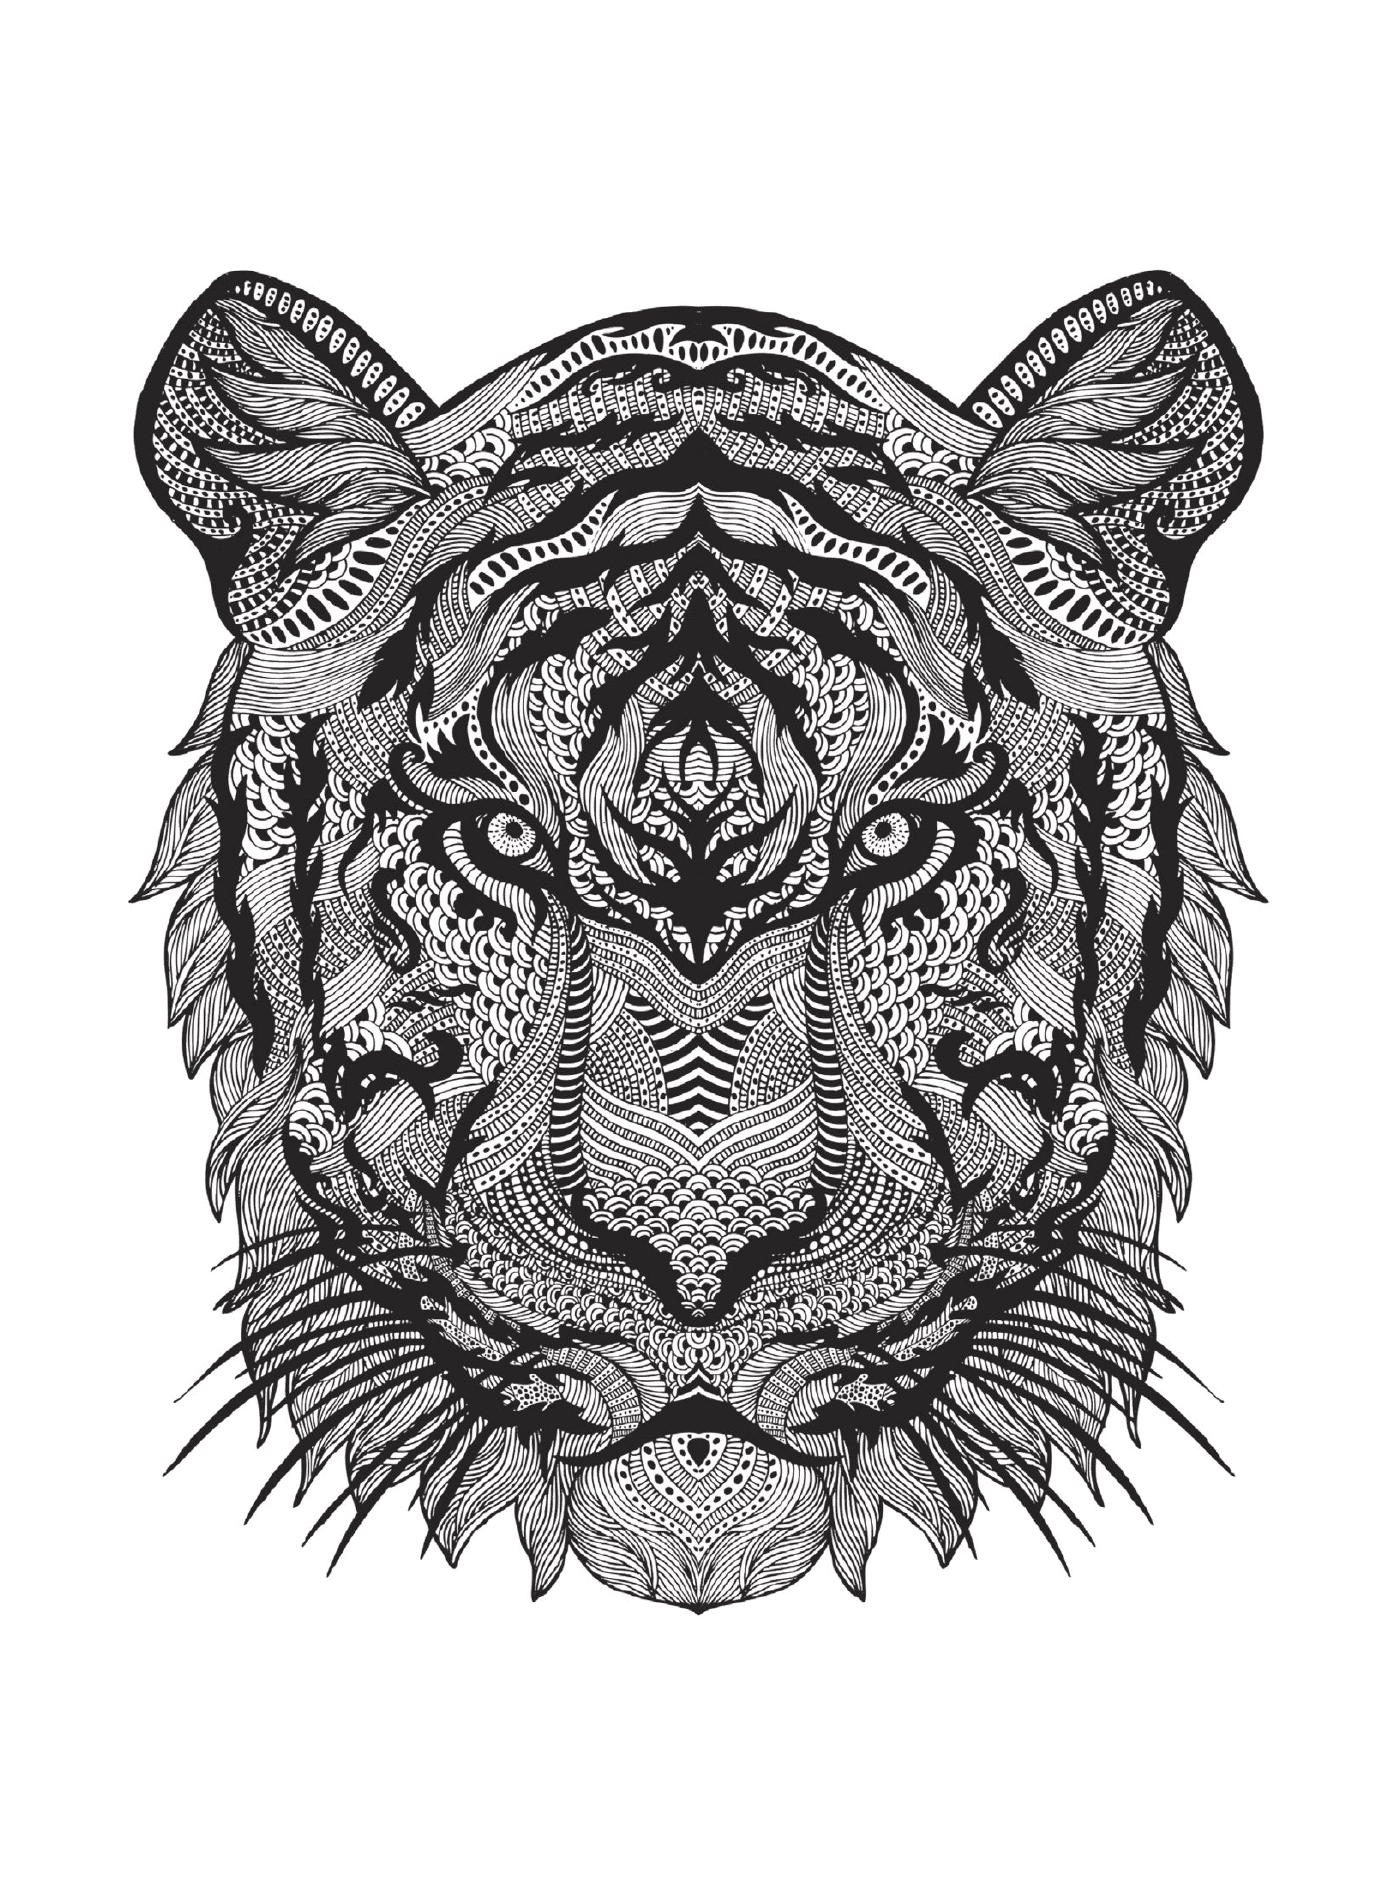   La tête d'un tigre 